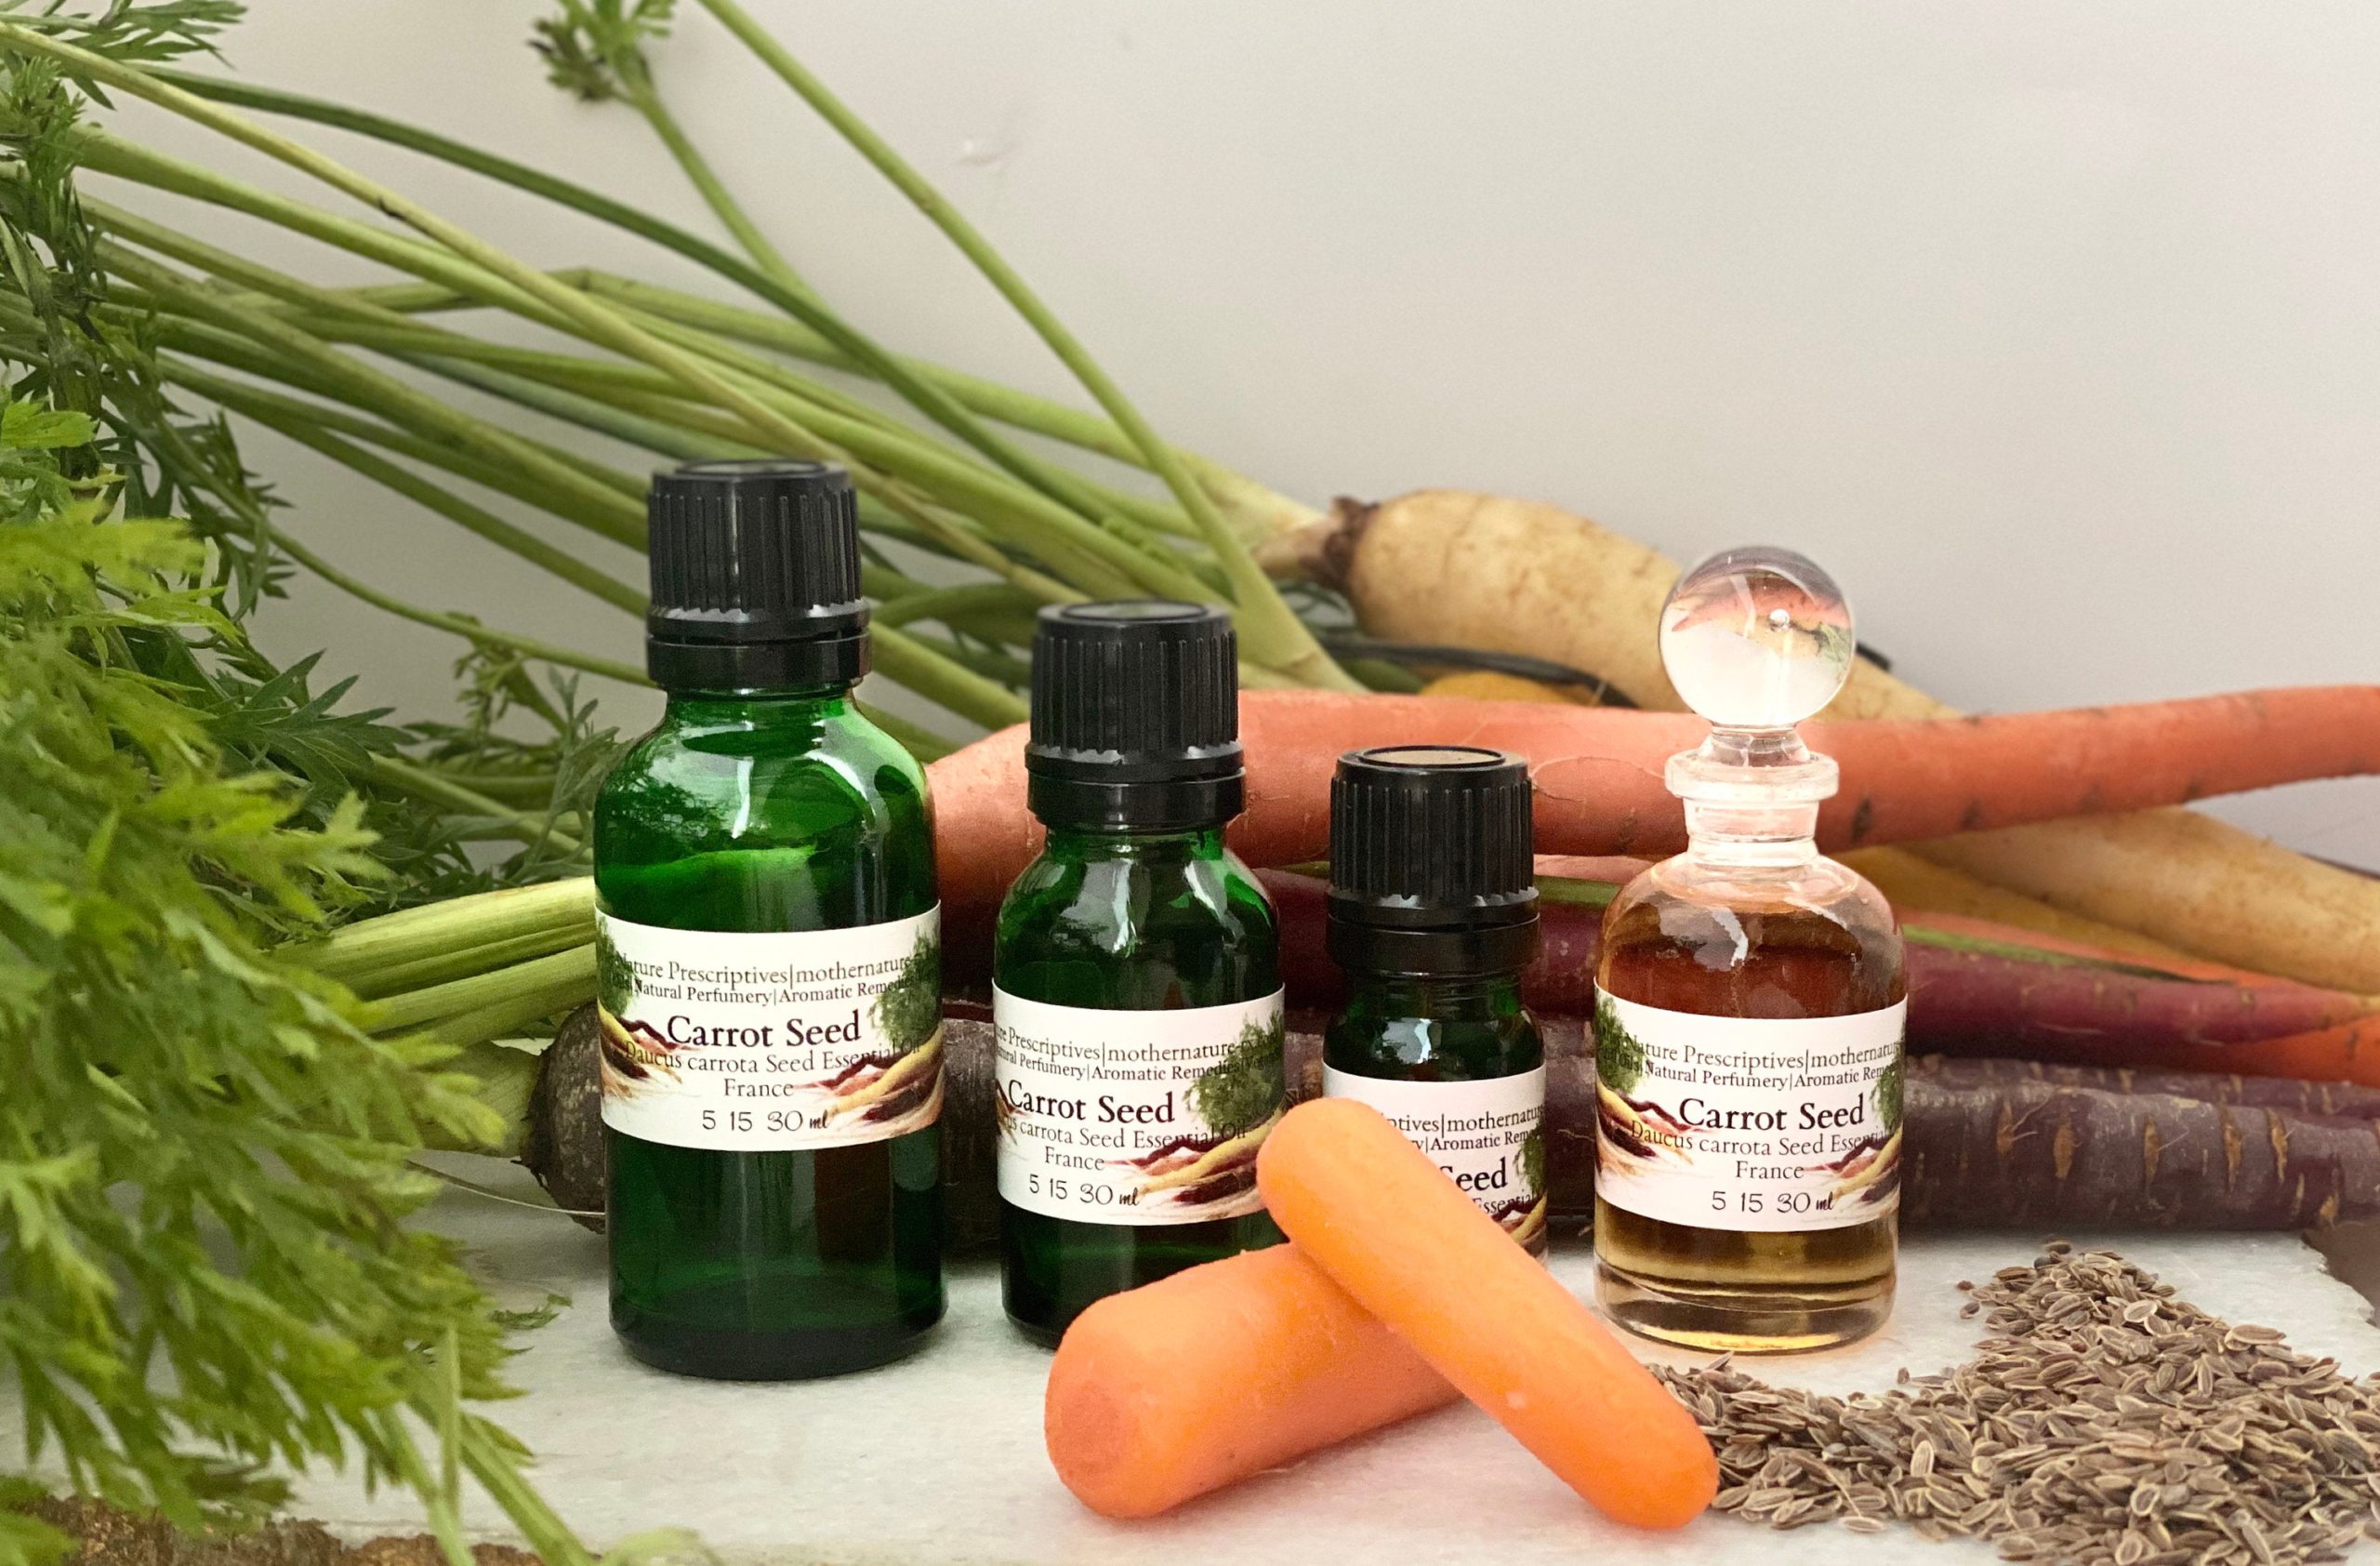 Carrot Seed Essential Oil 10ml (Daucus carrota) - Miami Aromatherapy